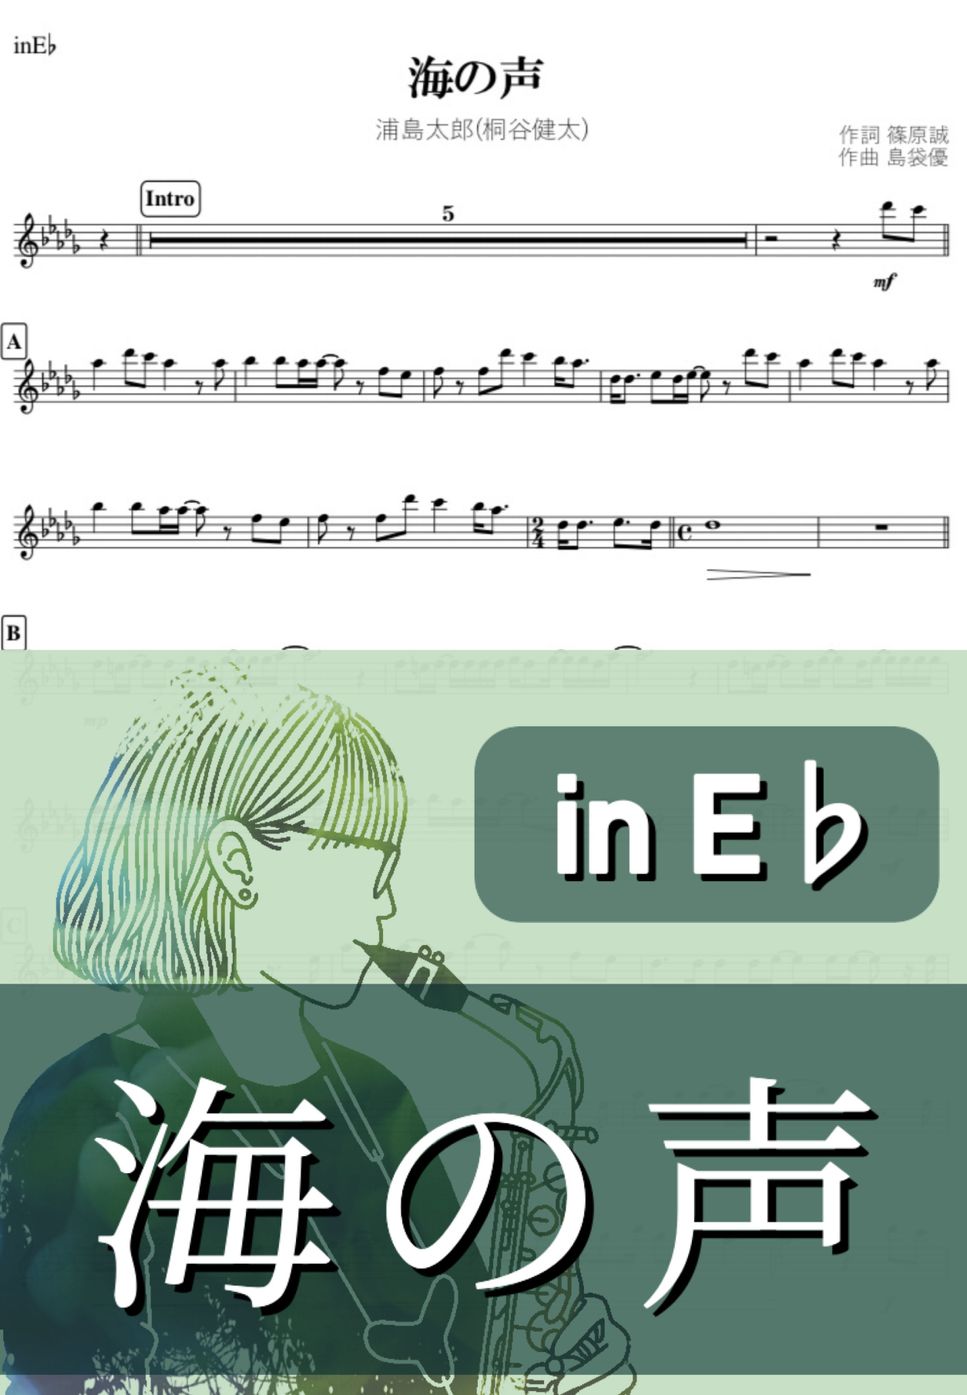 桐谷健太 - 海の声 (E♭) by kanamusic